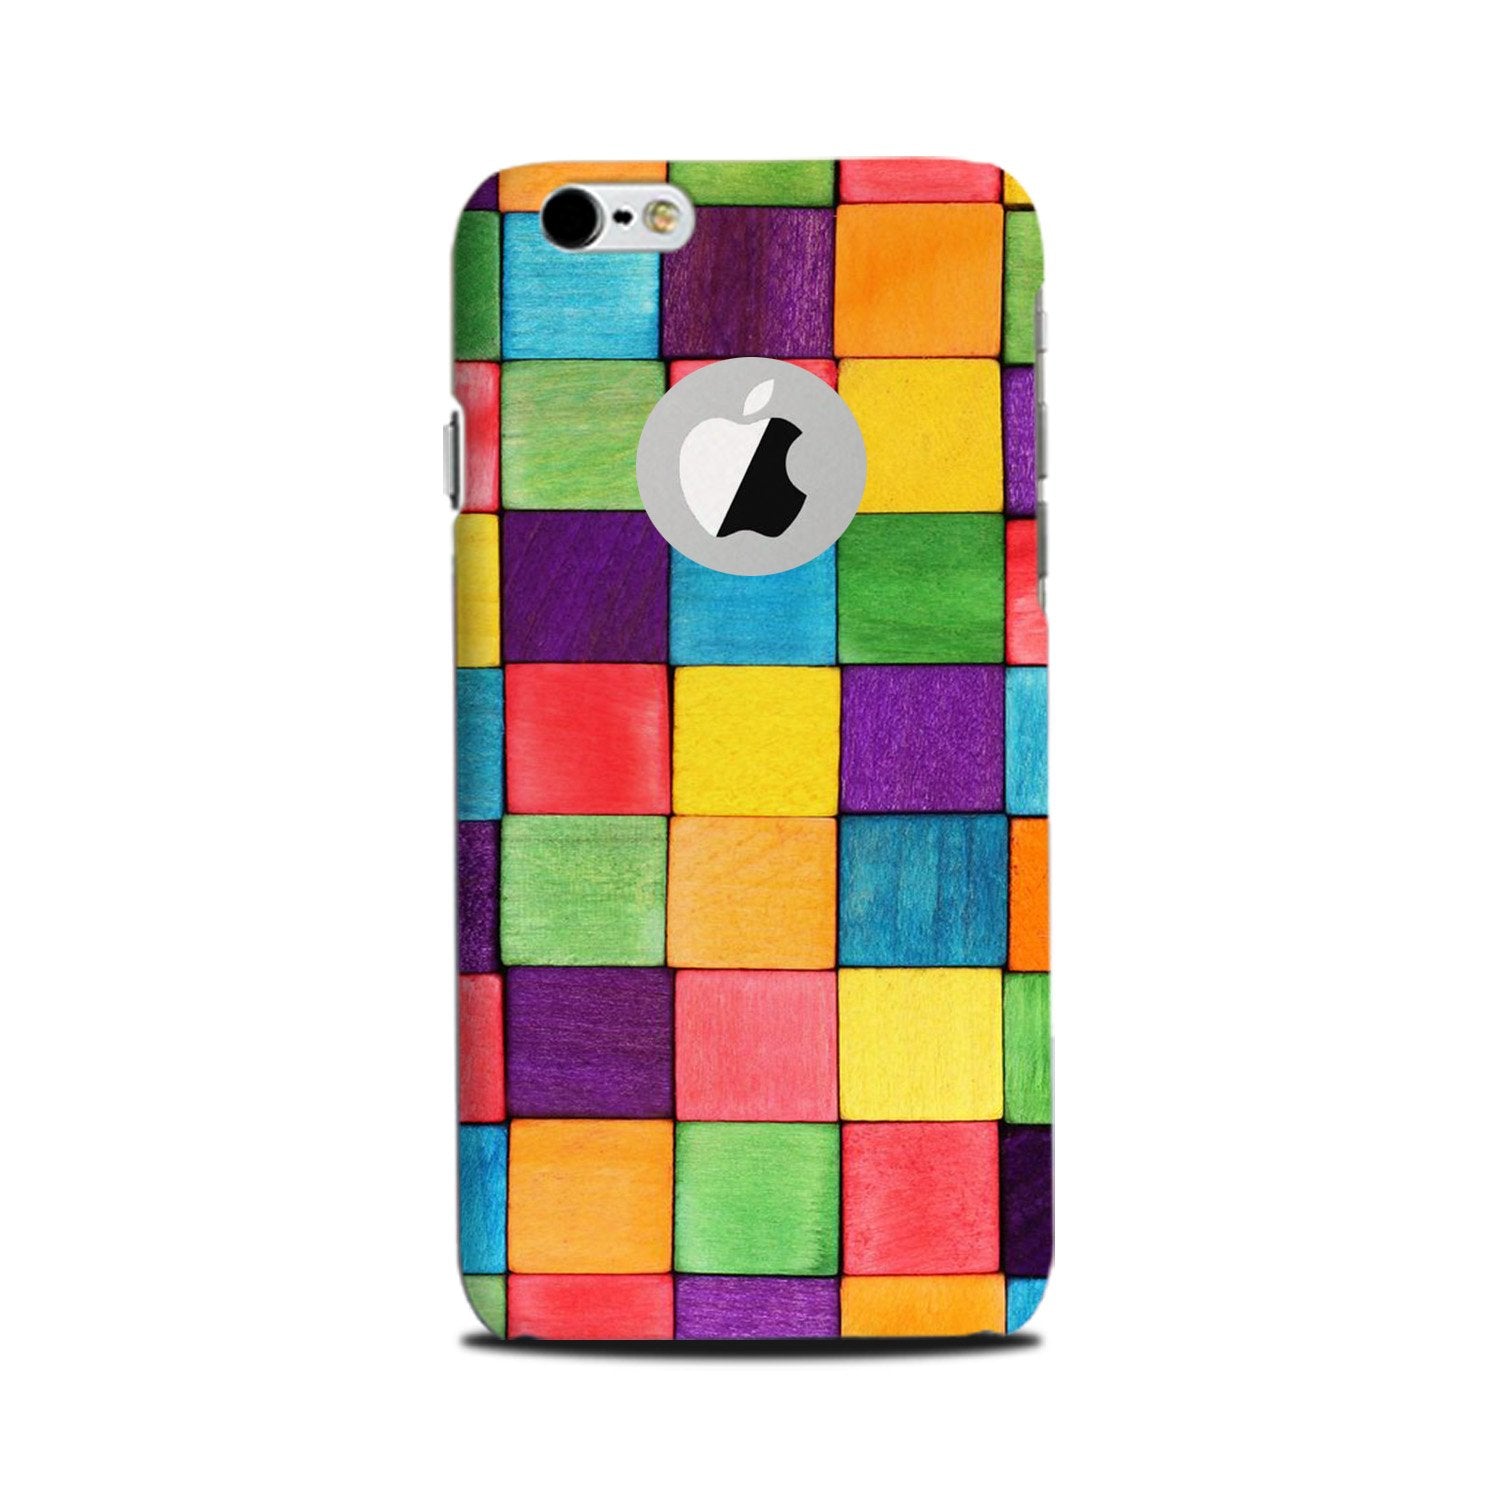 Colorful Square Case for iPhone 6 Plus / 6s Plus logo cut(Design No. 218)